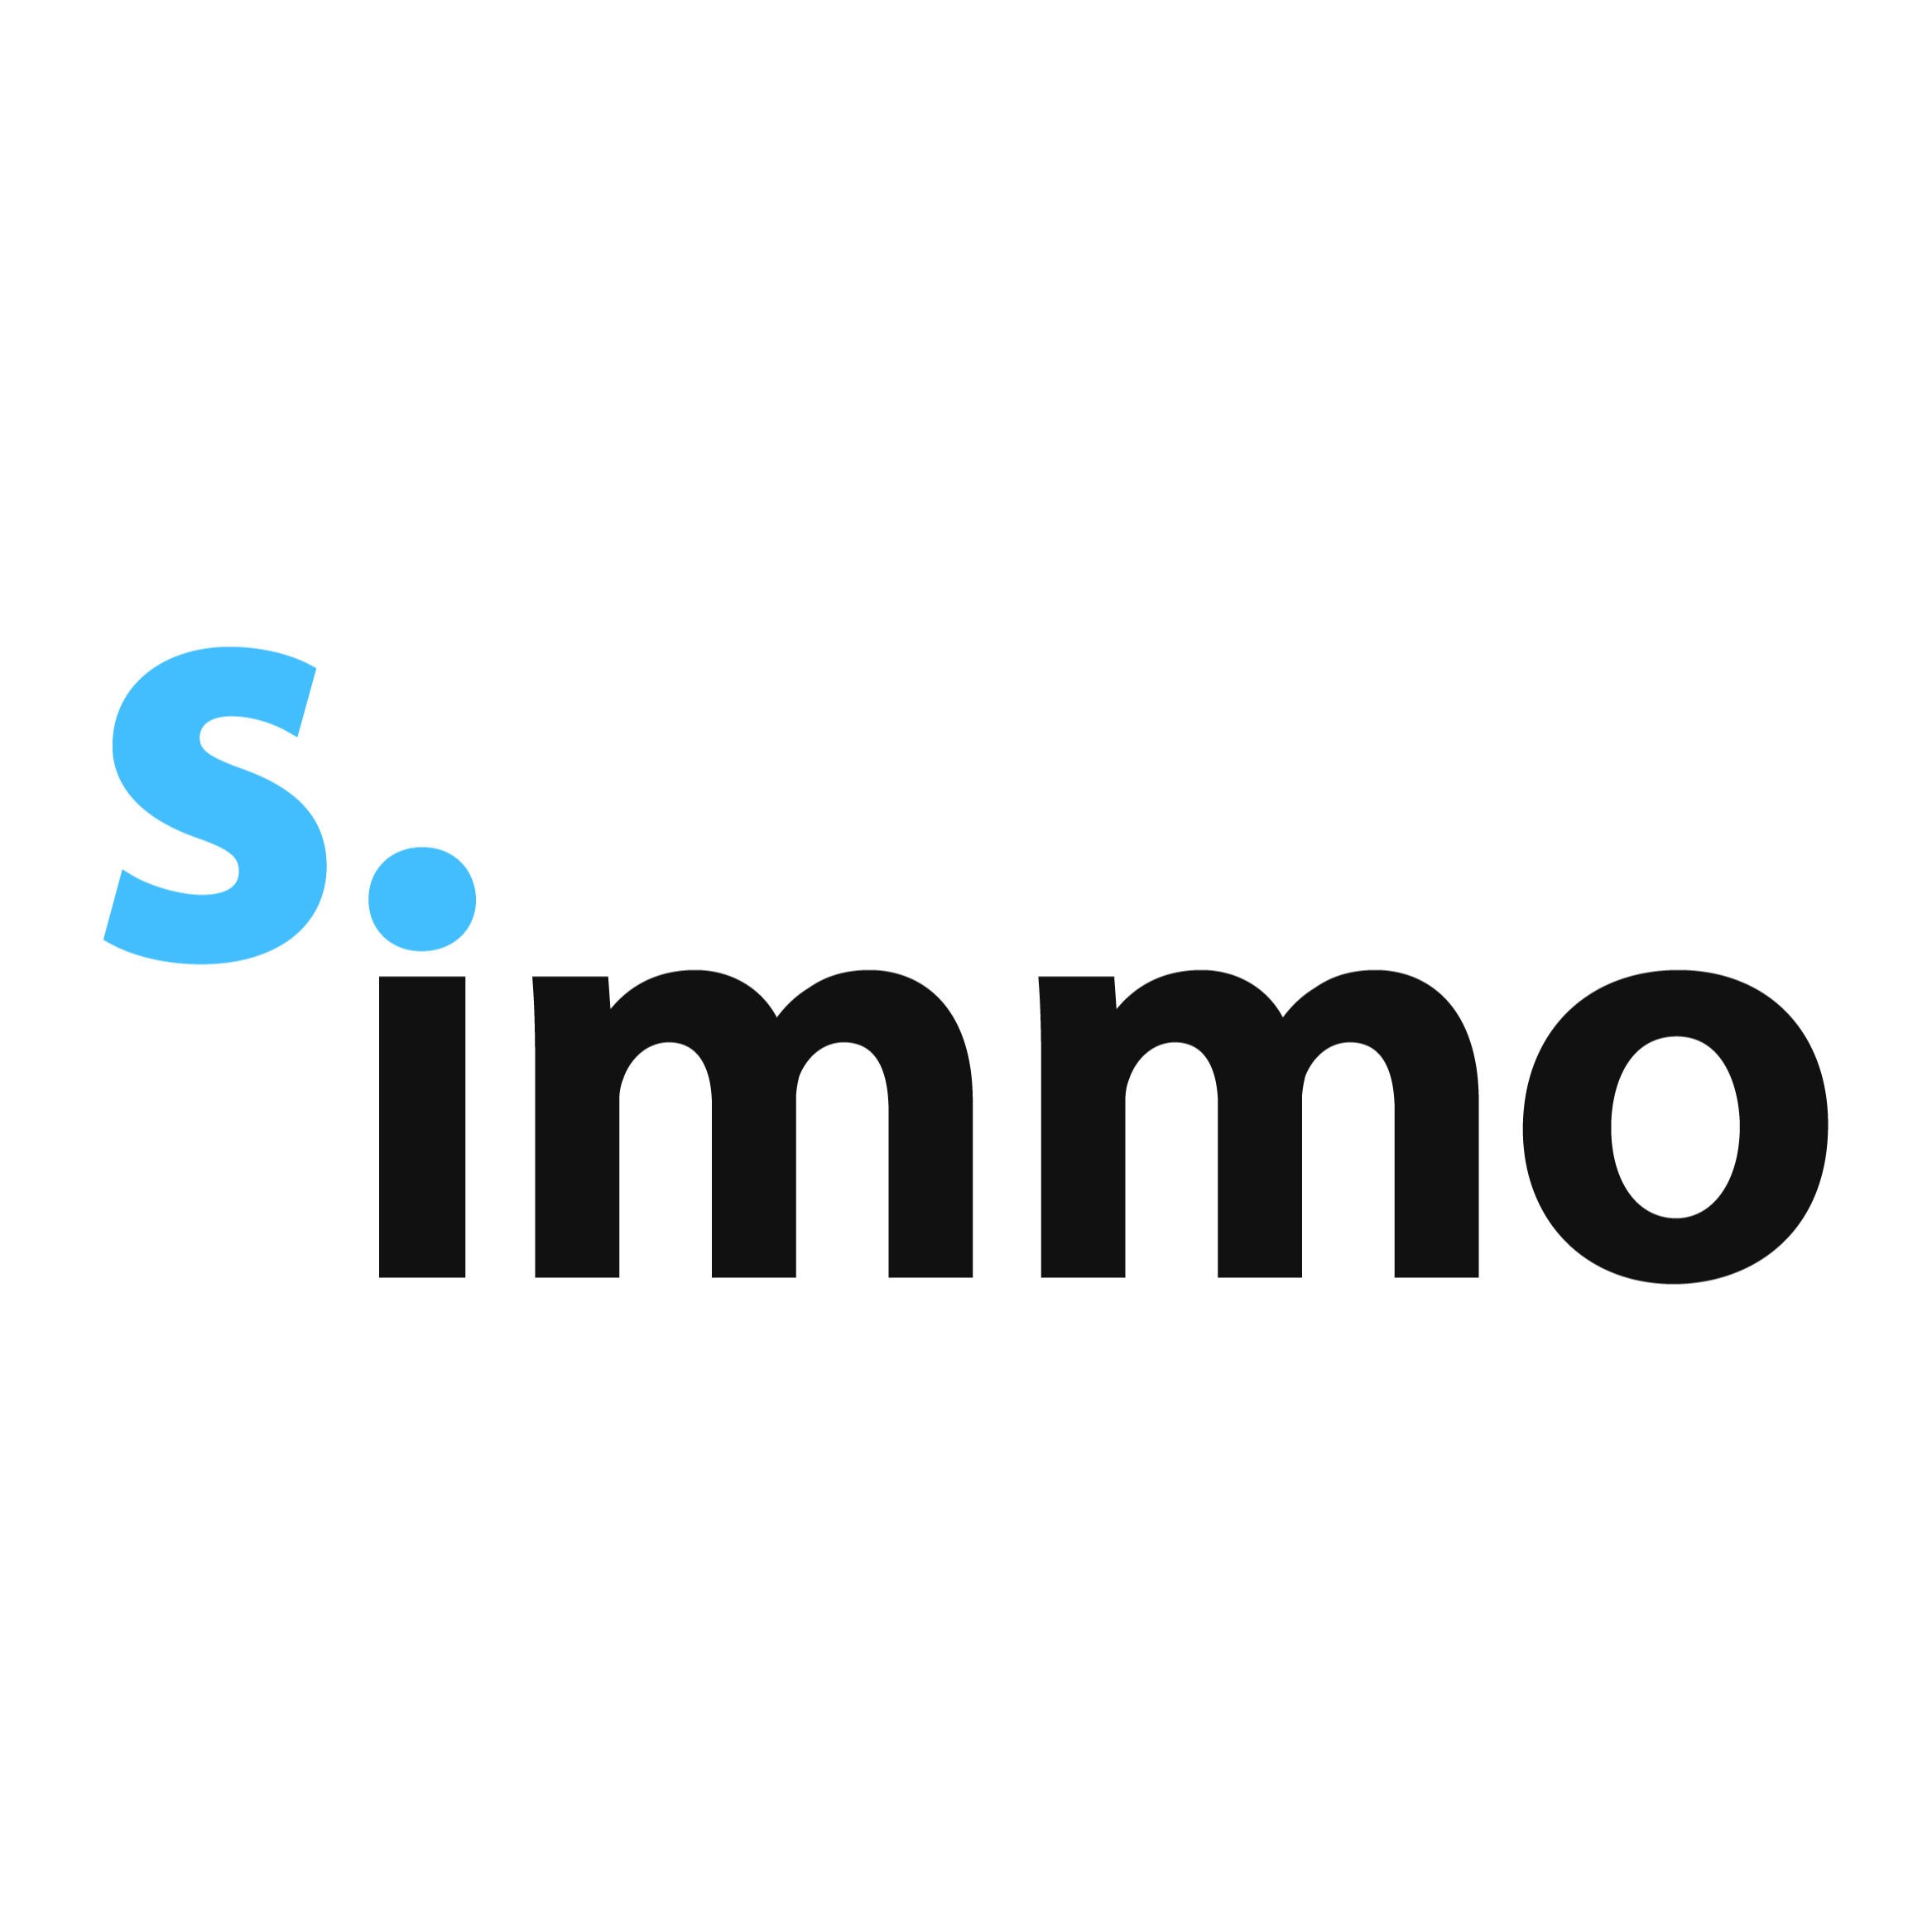 s.immo - Immobilienbüro Schwanke Logo